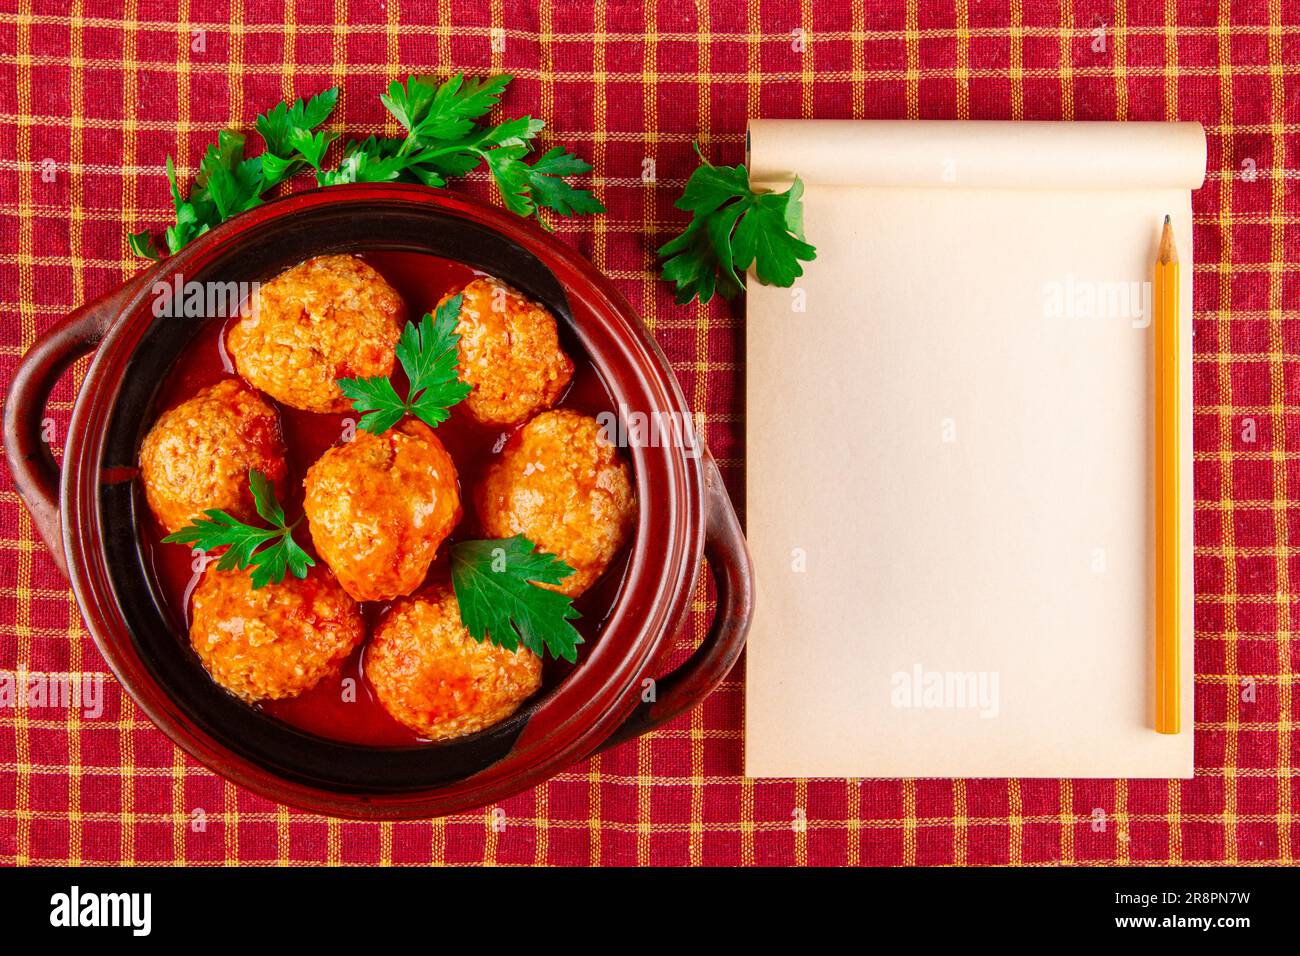 Blank recipebook and kottbullar meatballs in red sauce Stock Photo